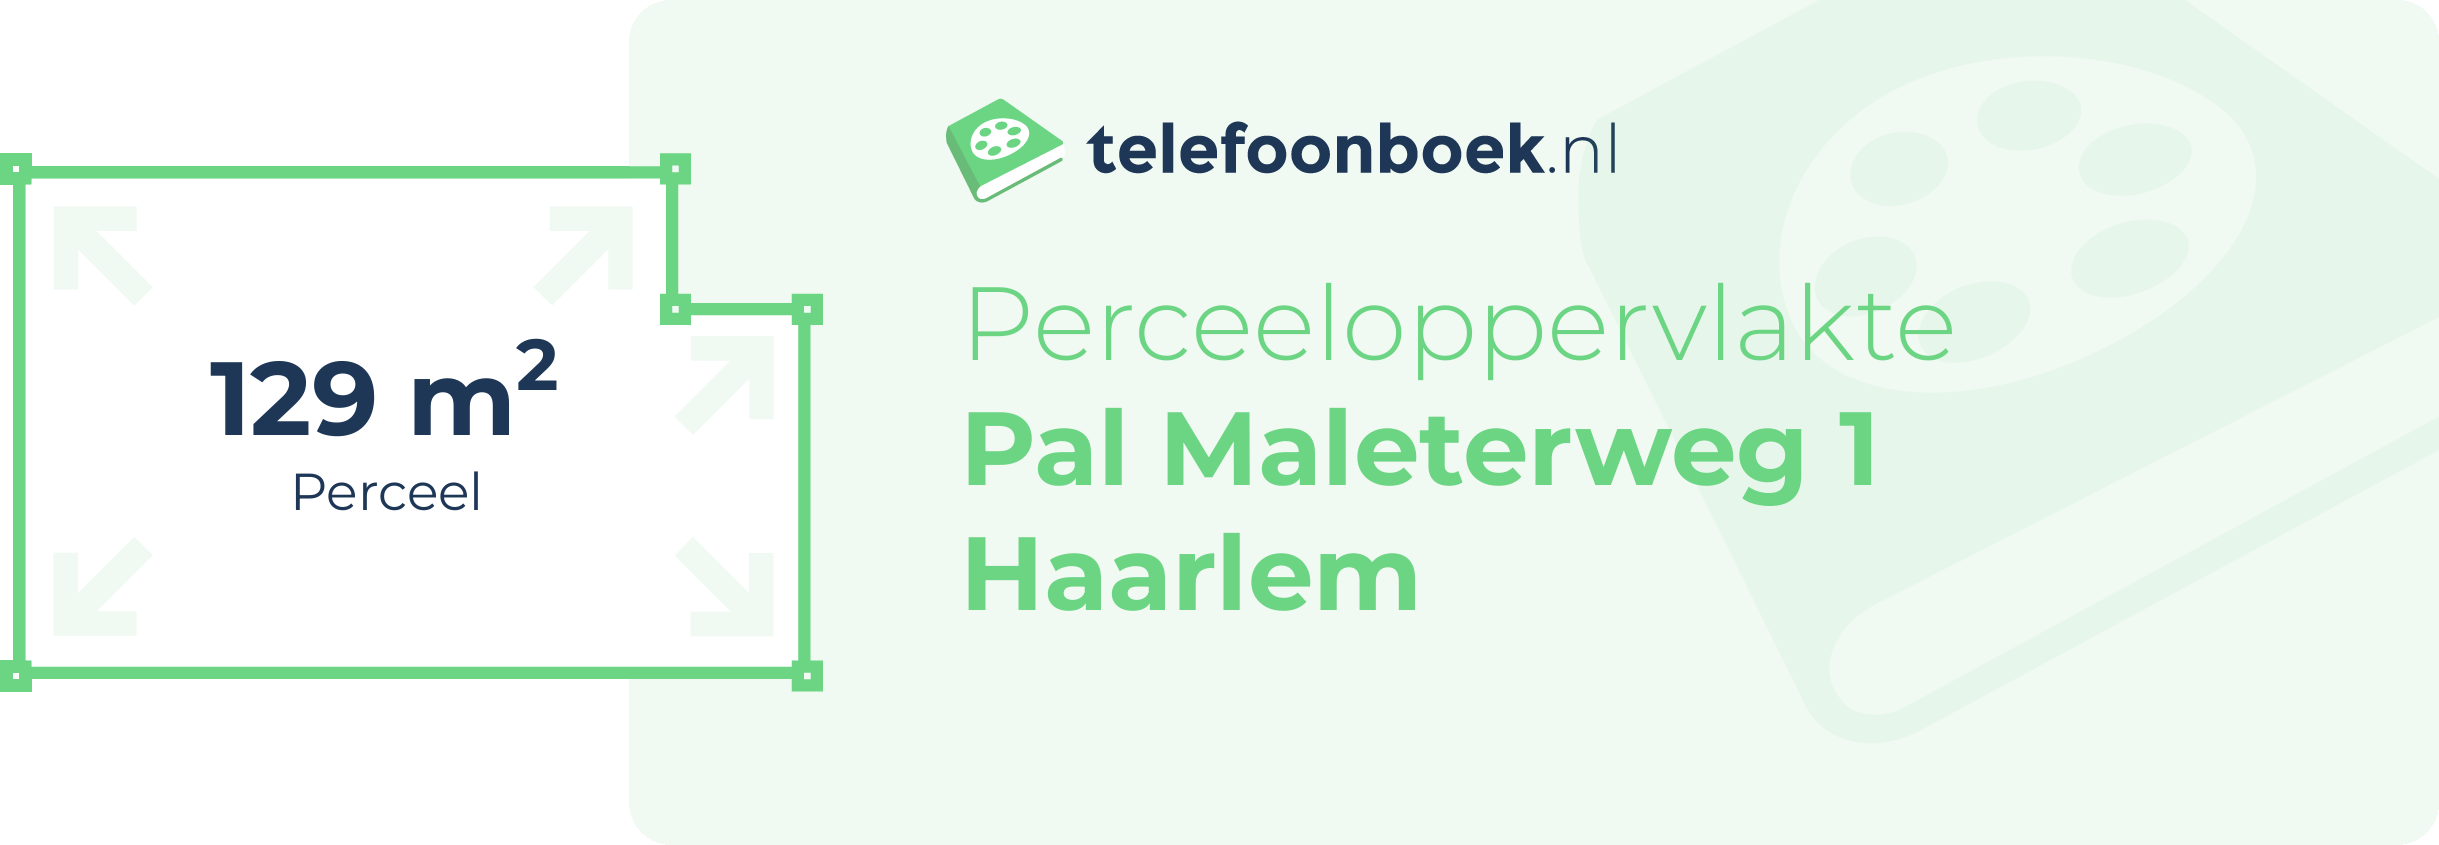 Perceeloppervlakte Pal Maleterweg 1 Haarlem